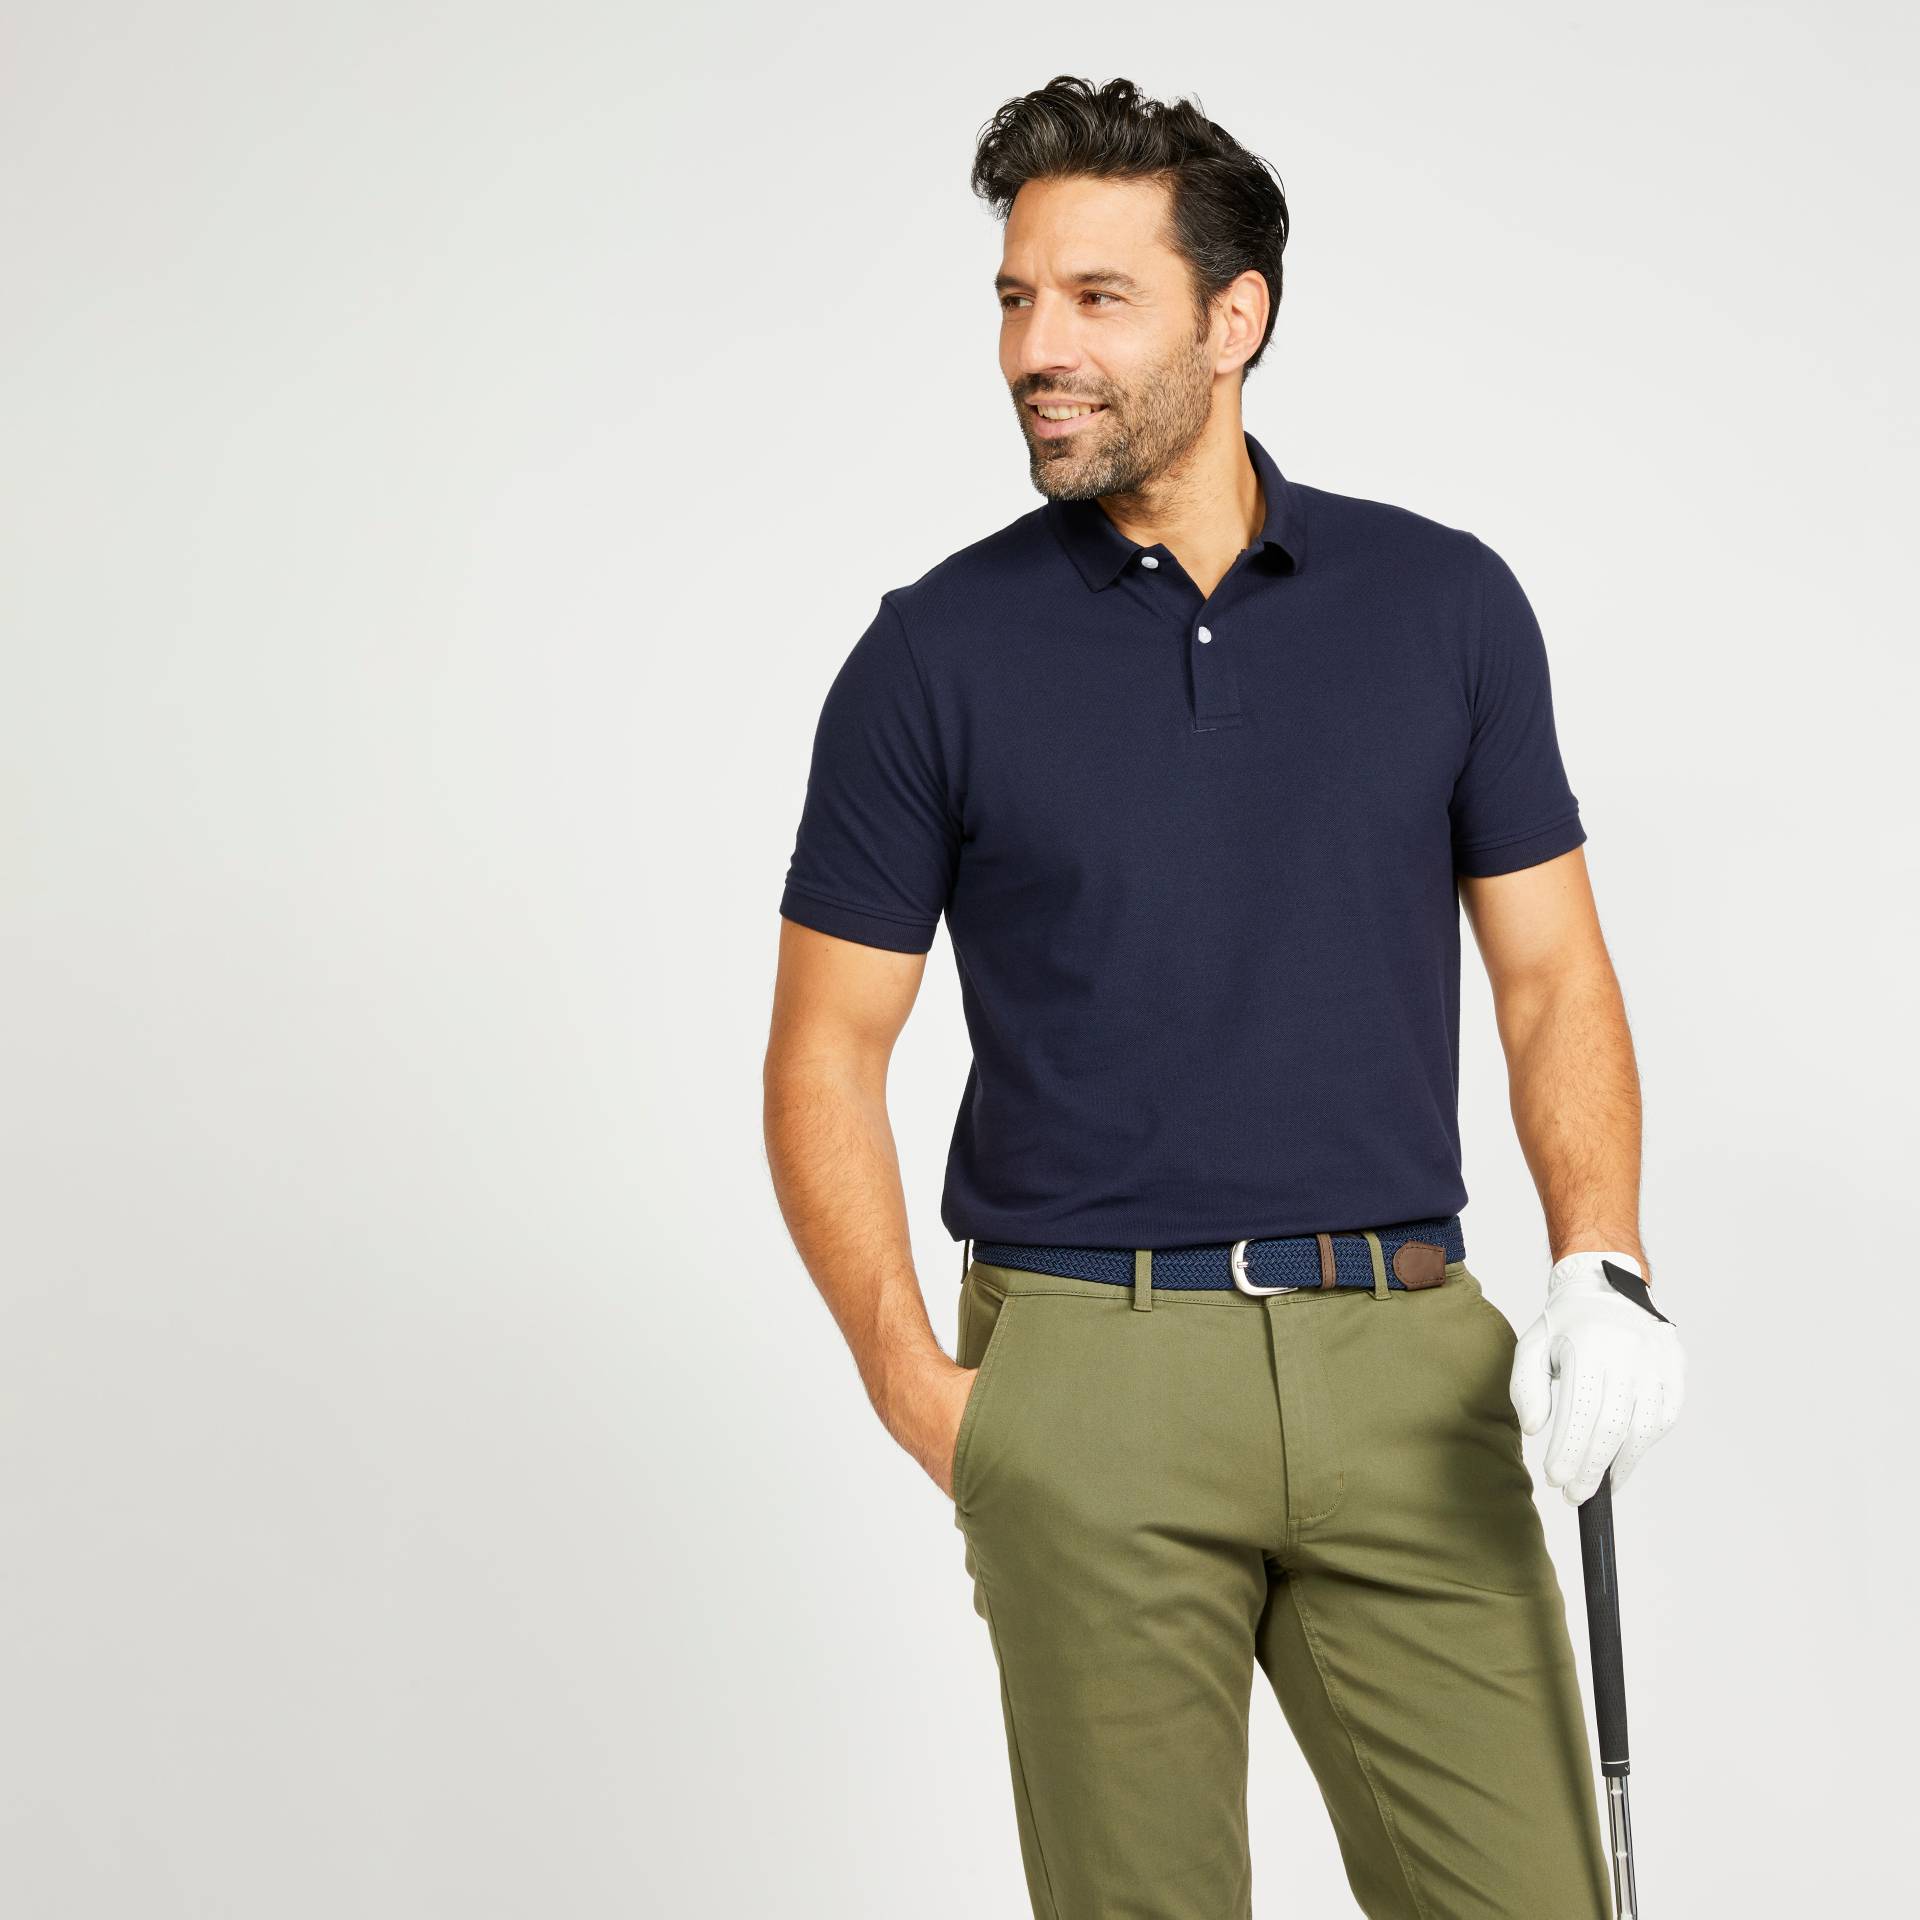 Herren Golf Poloshirt kurzarm - MW500 marineblau von INESIS